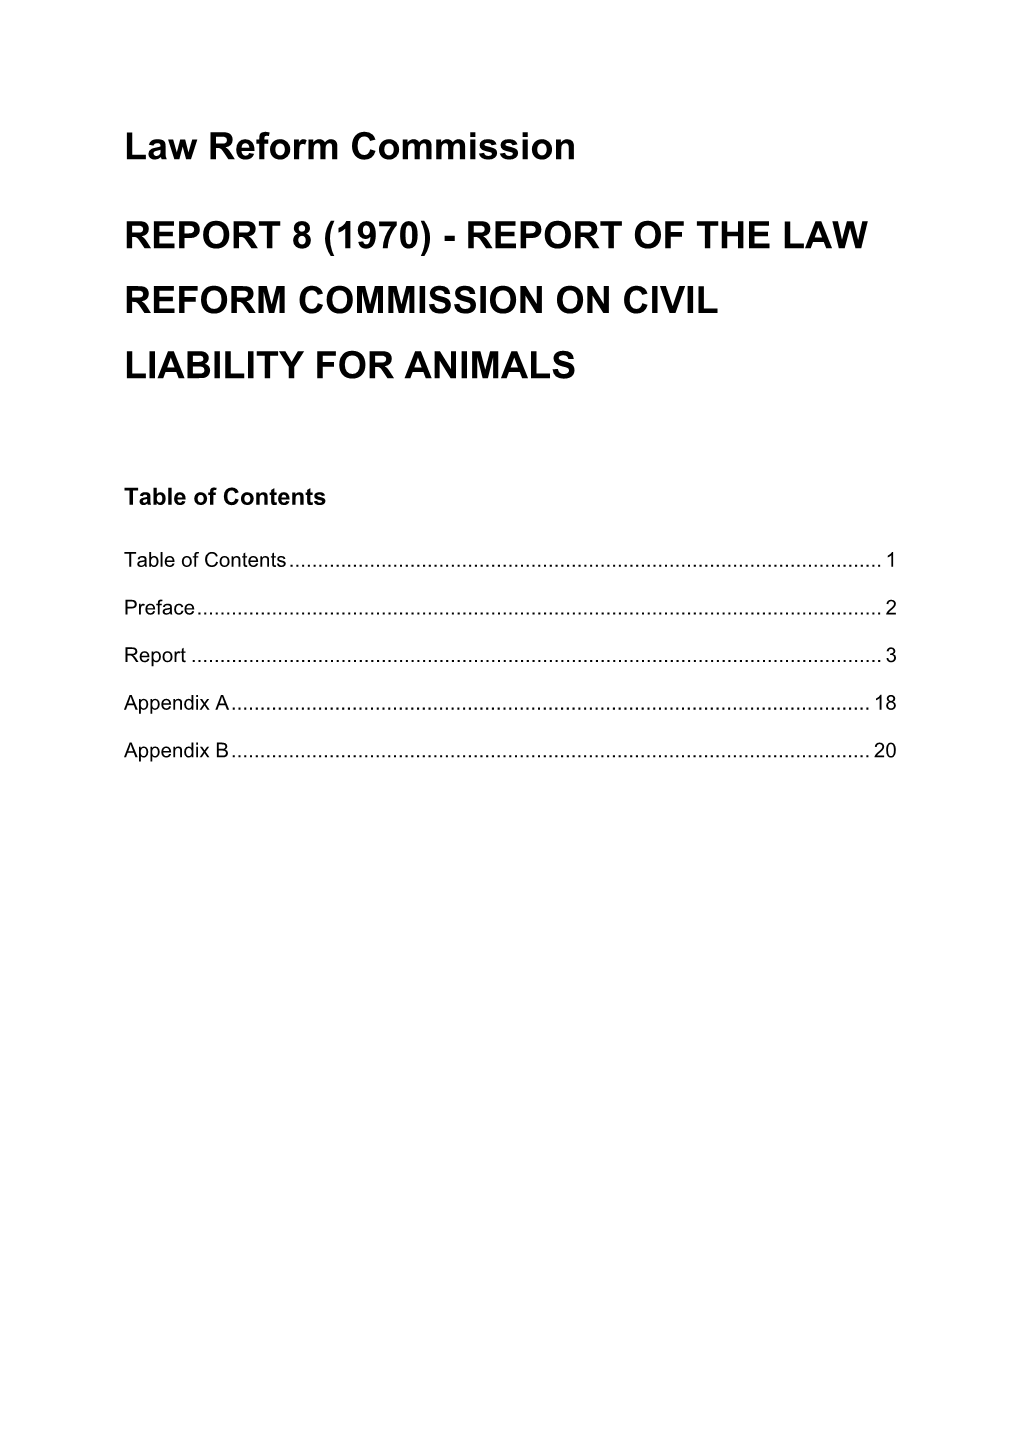 Report 8: Civil Liability for Animals